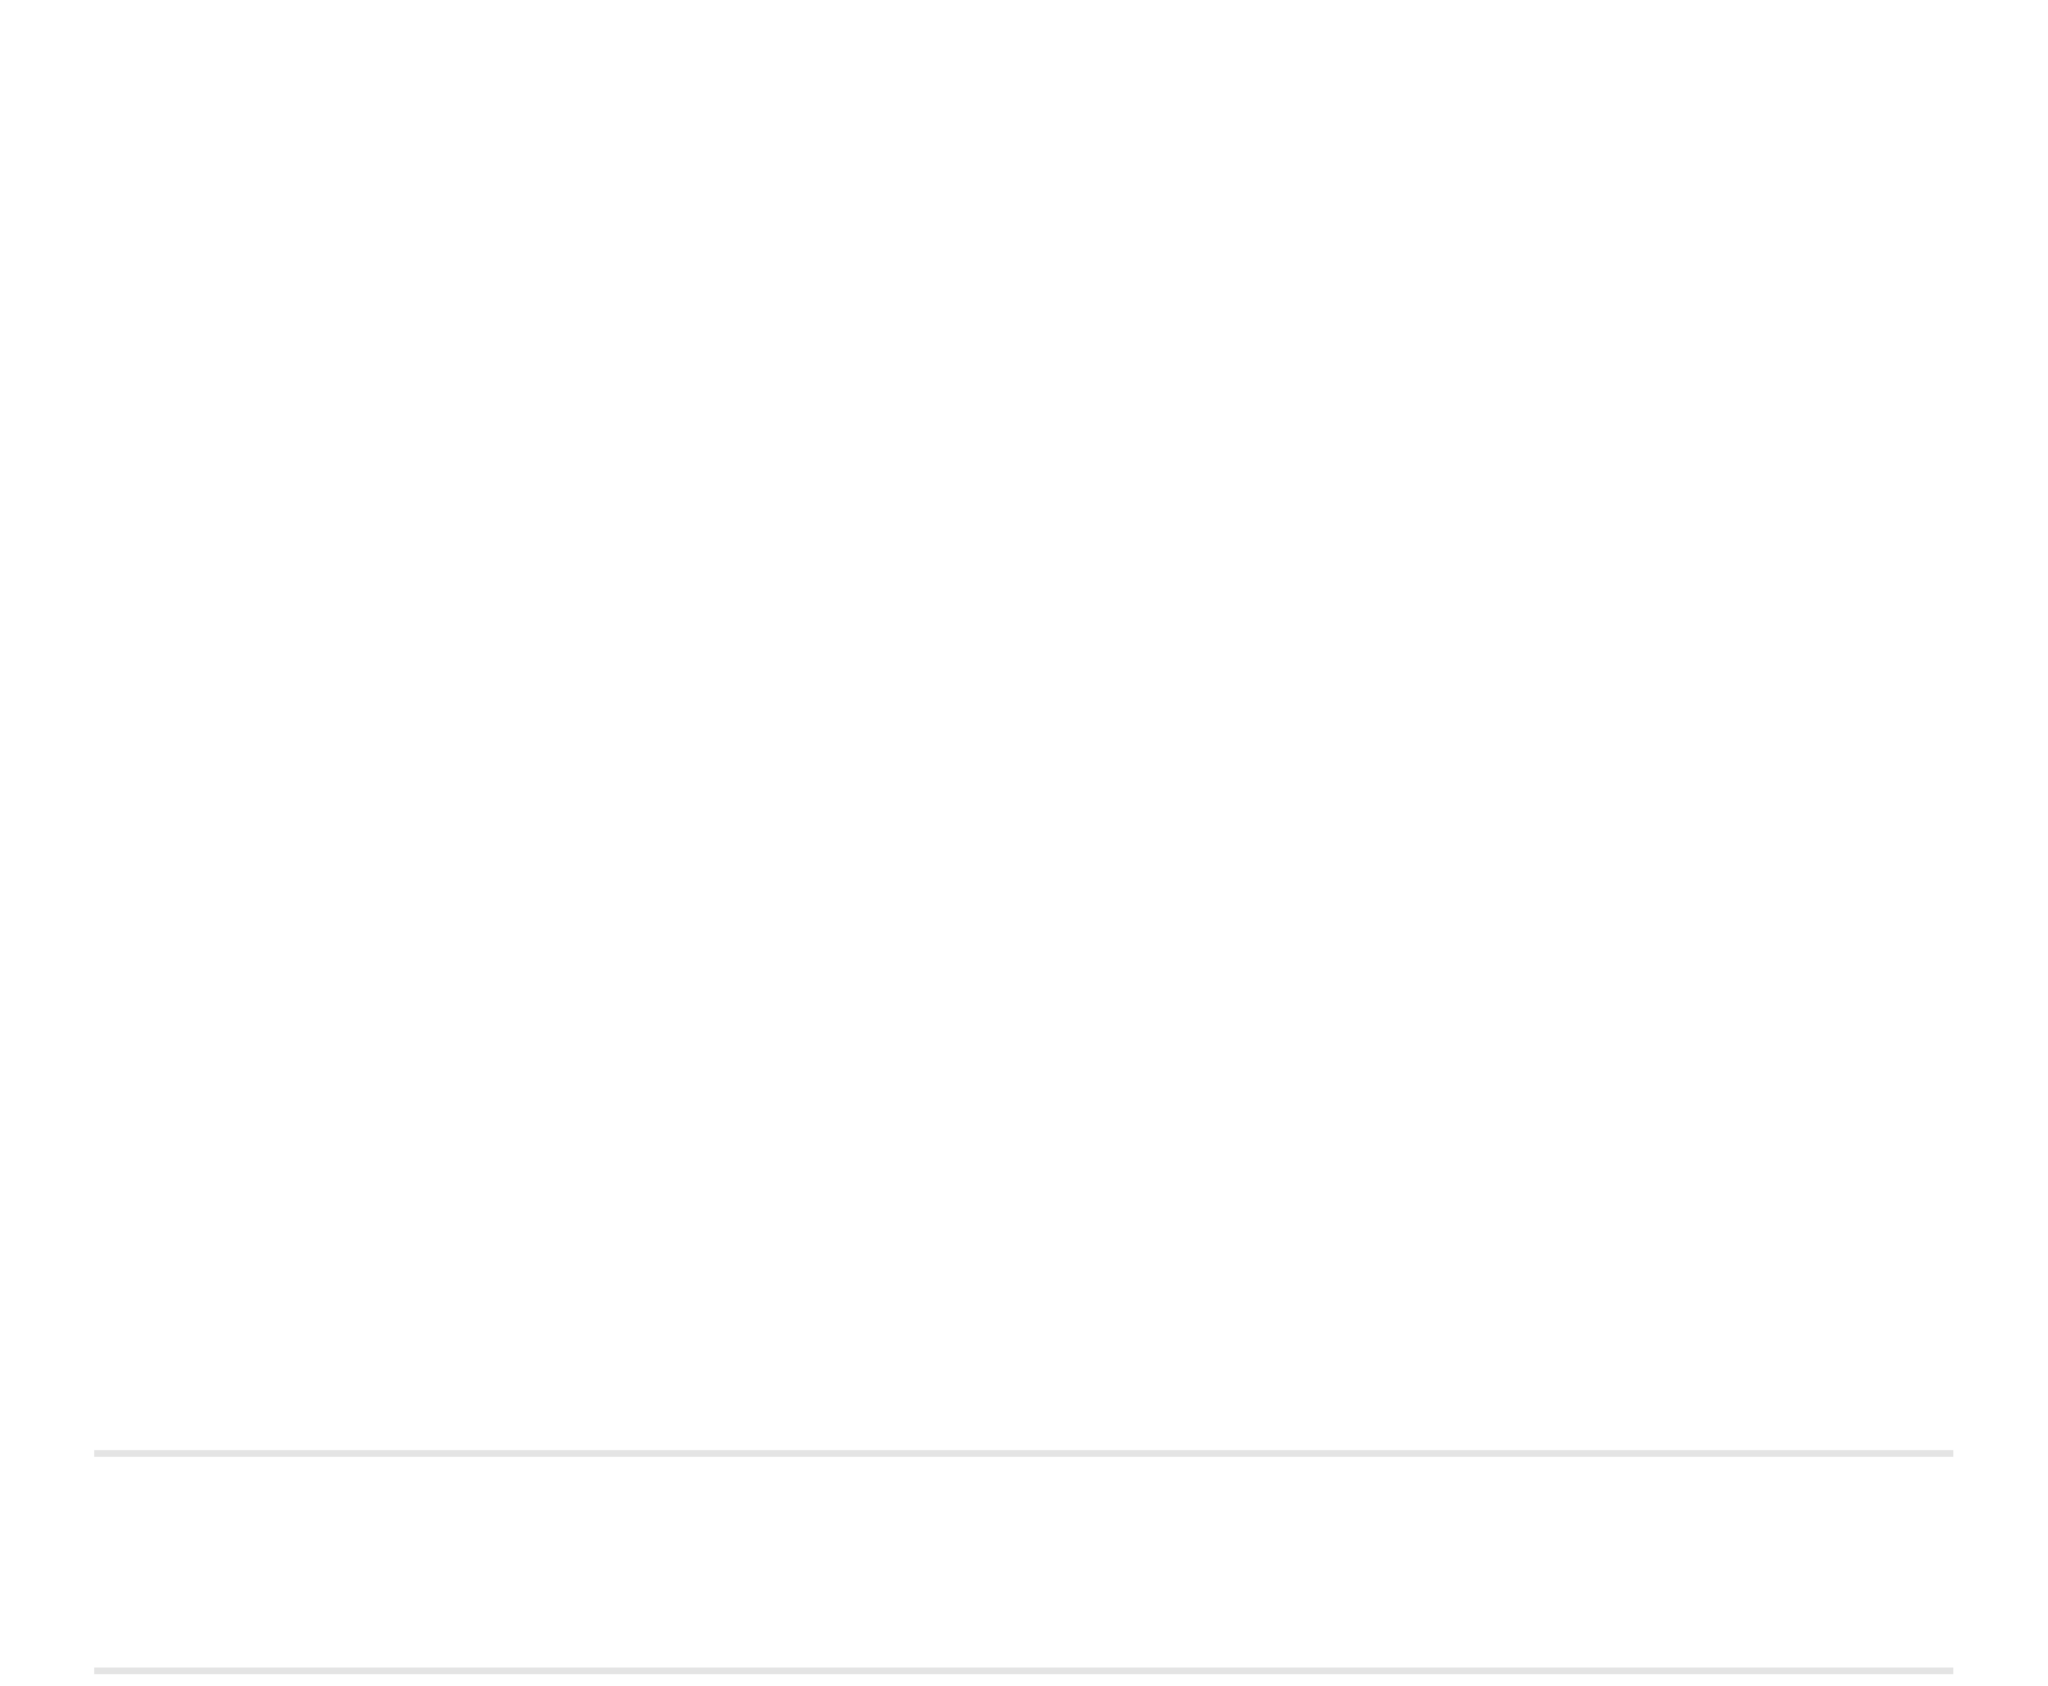 Canopy Builders